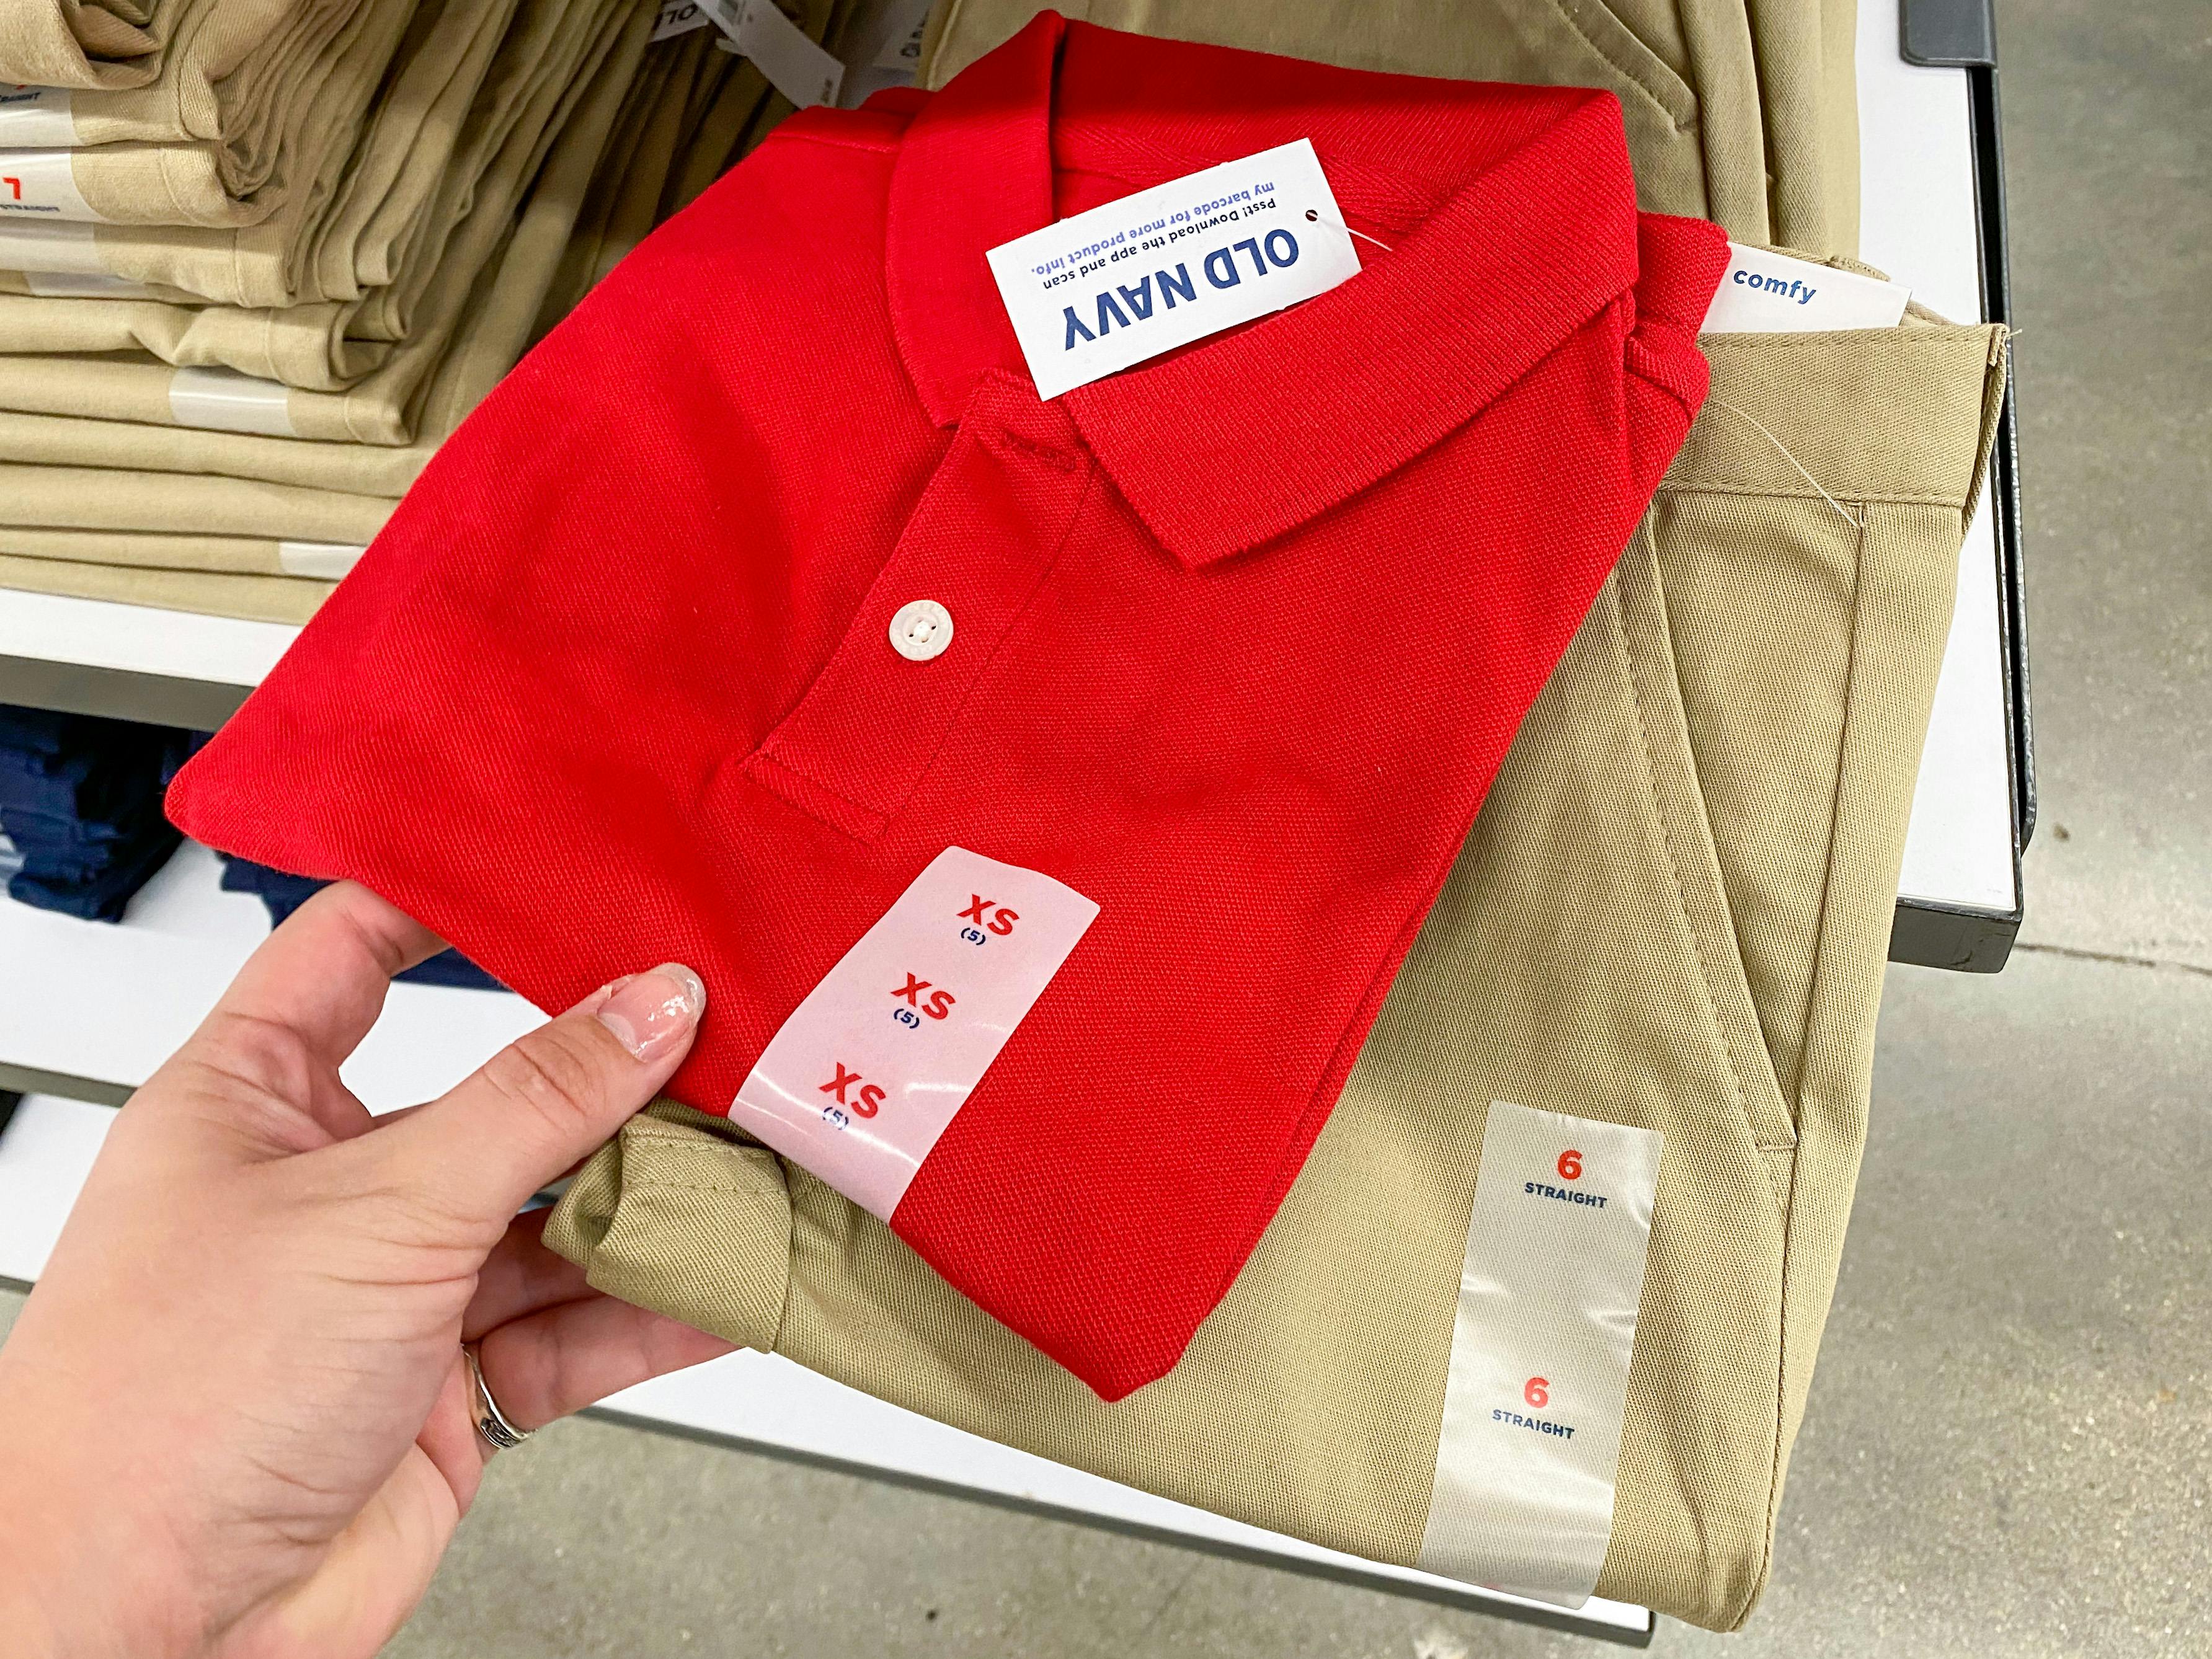 Walmart Tests New Employee Dress Code